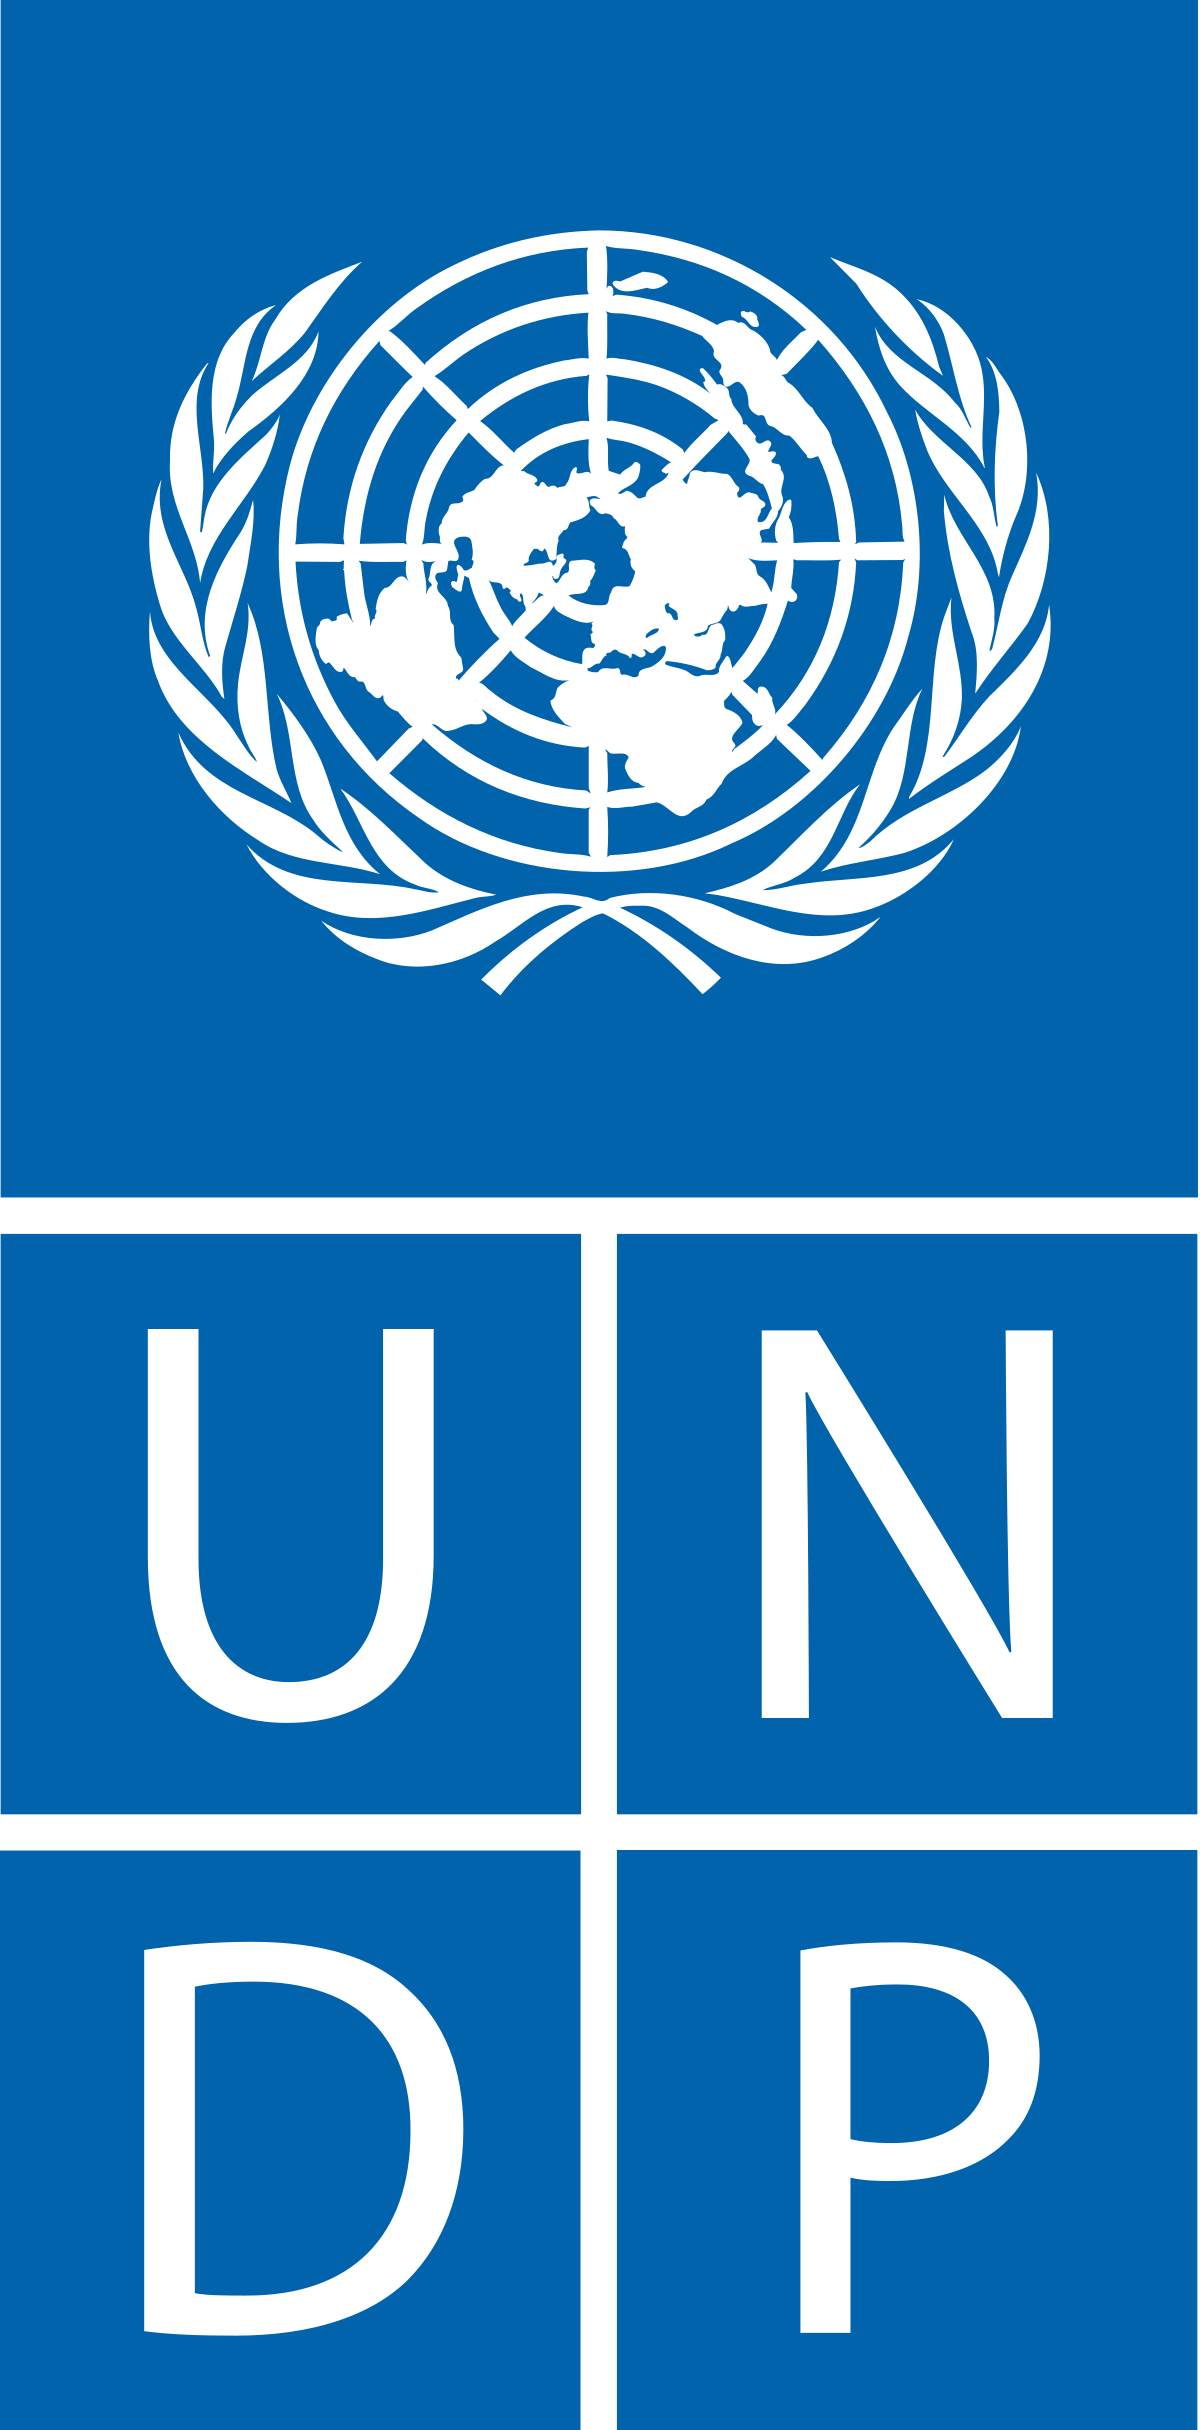 1200px-UNDP_logo.svg